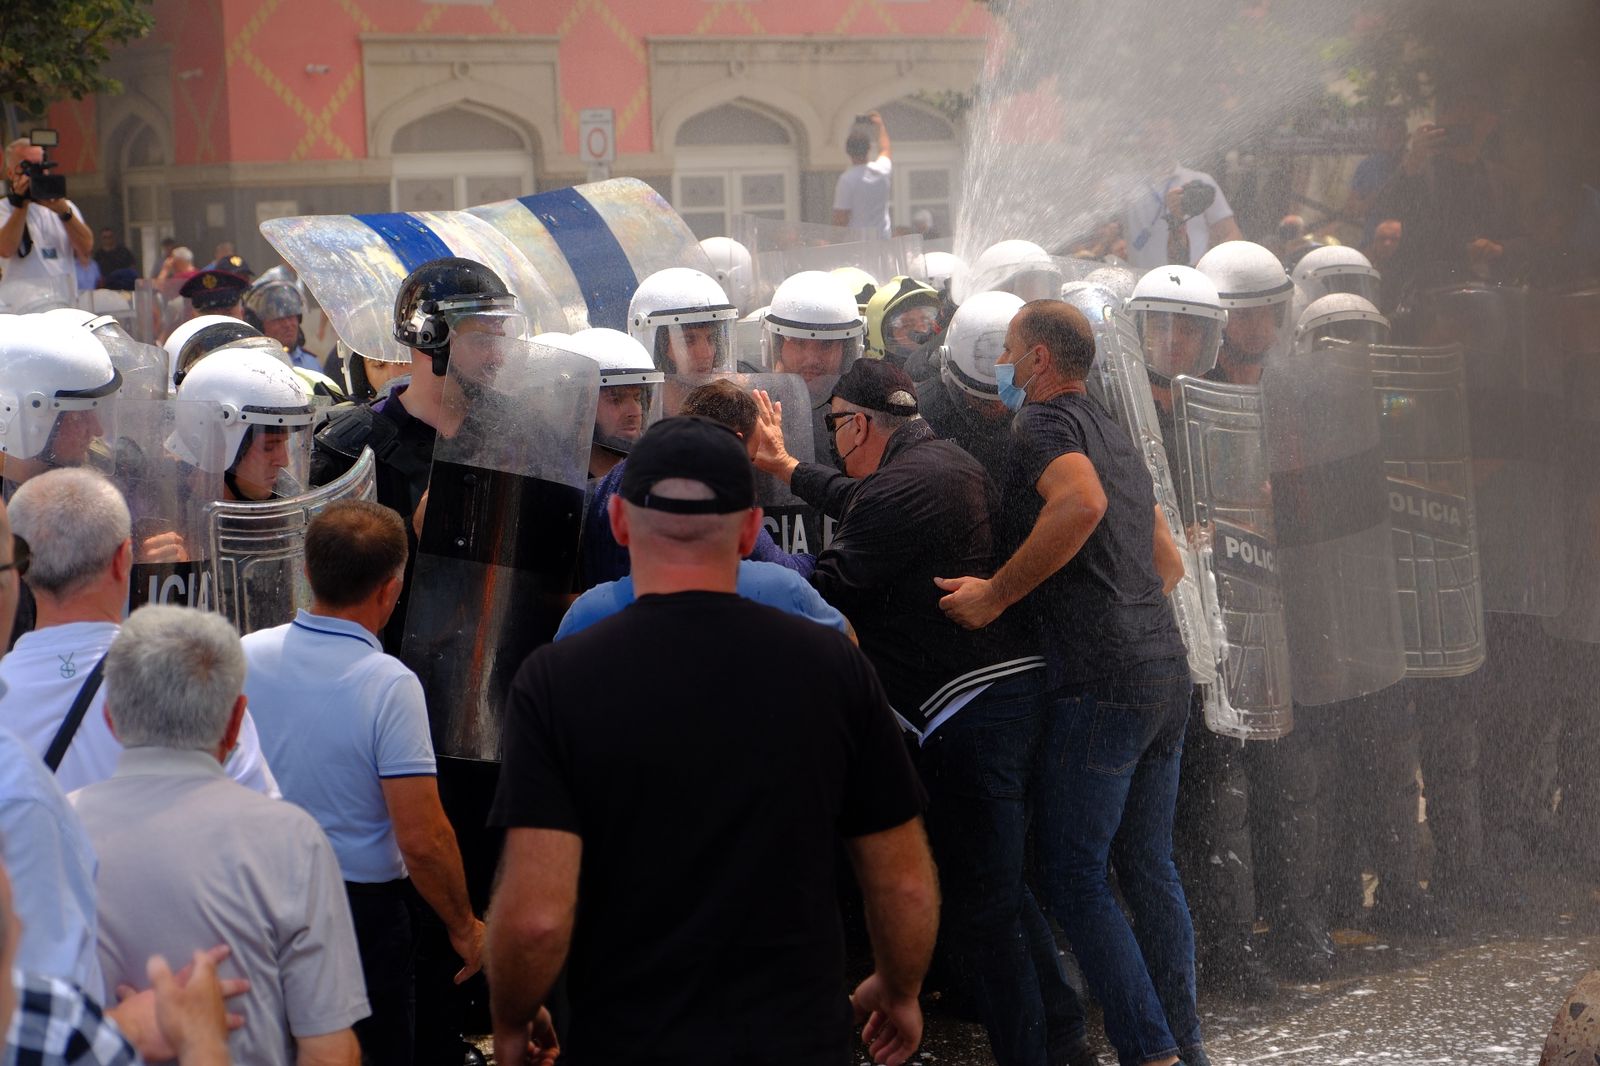 protesta para bashkise teliti police zorraxhinj nuk e shuani dot zjarrin e protestes